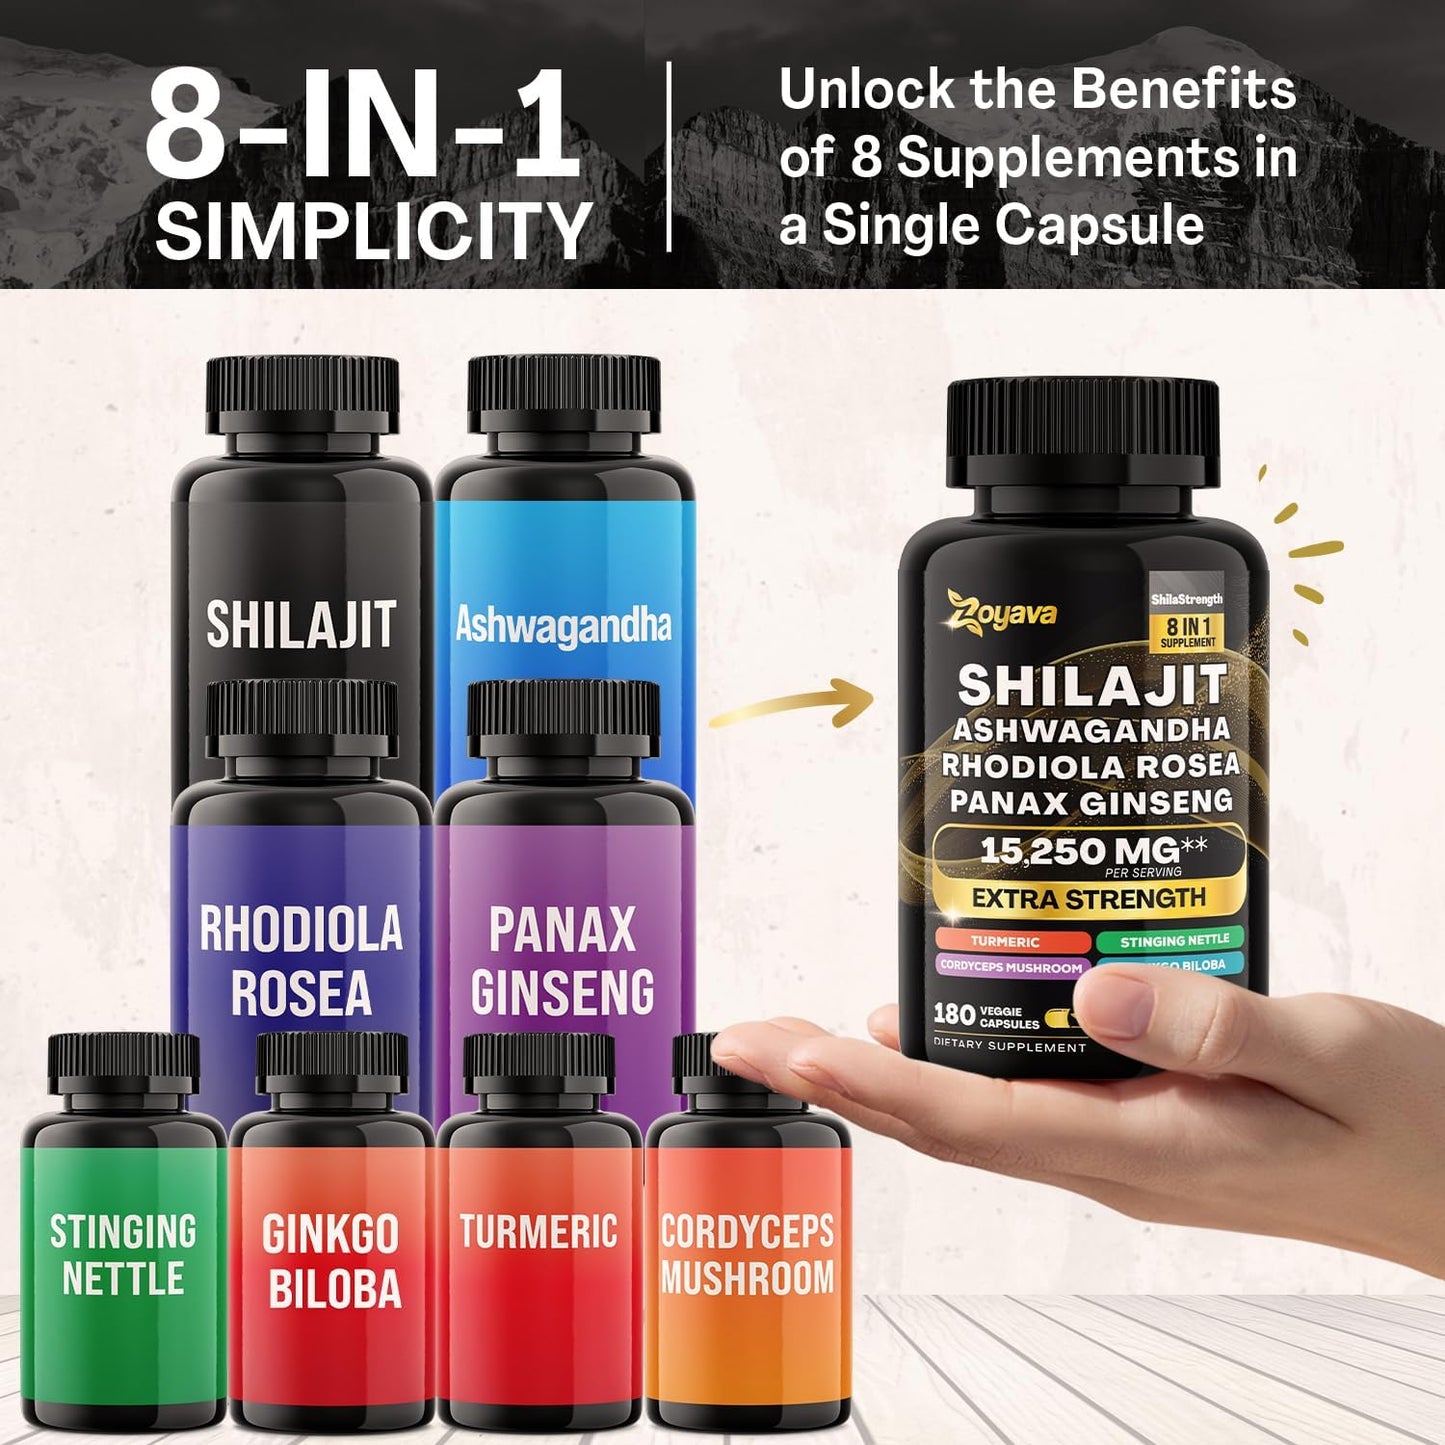 Shilajit 8-In-1 Supplement and Saffron 6-In-1 Supplement Bundle